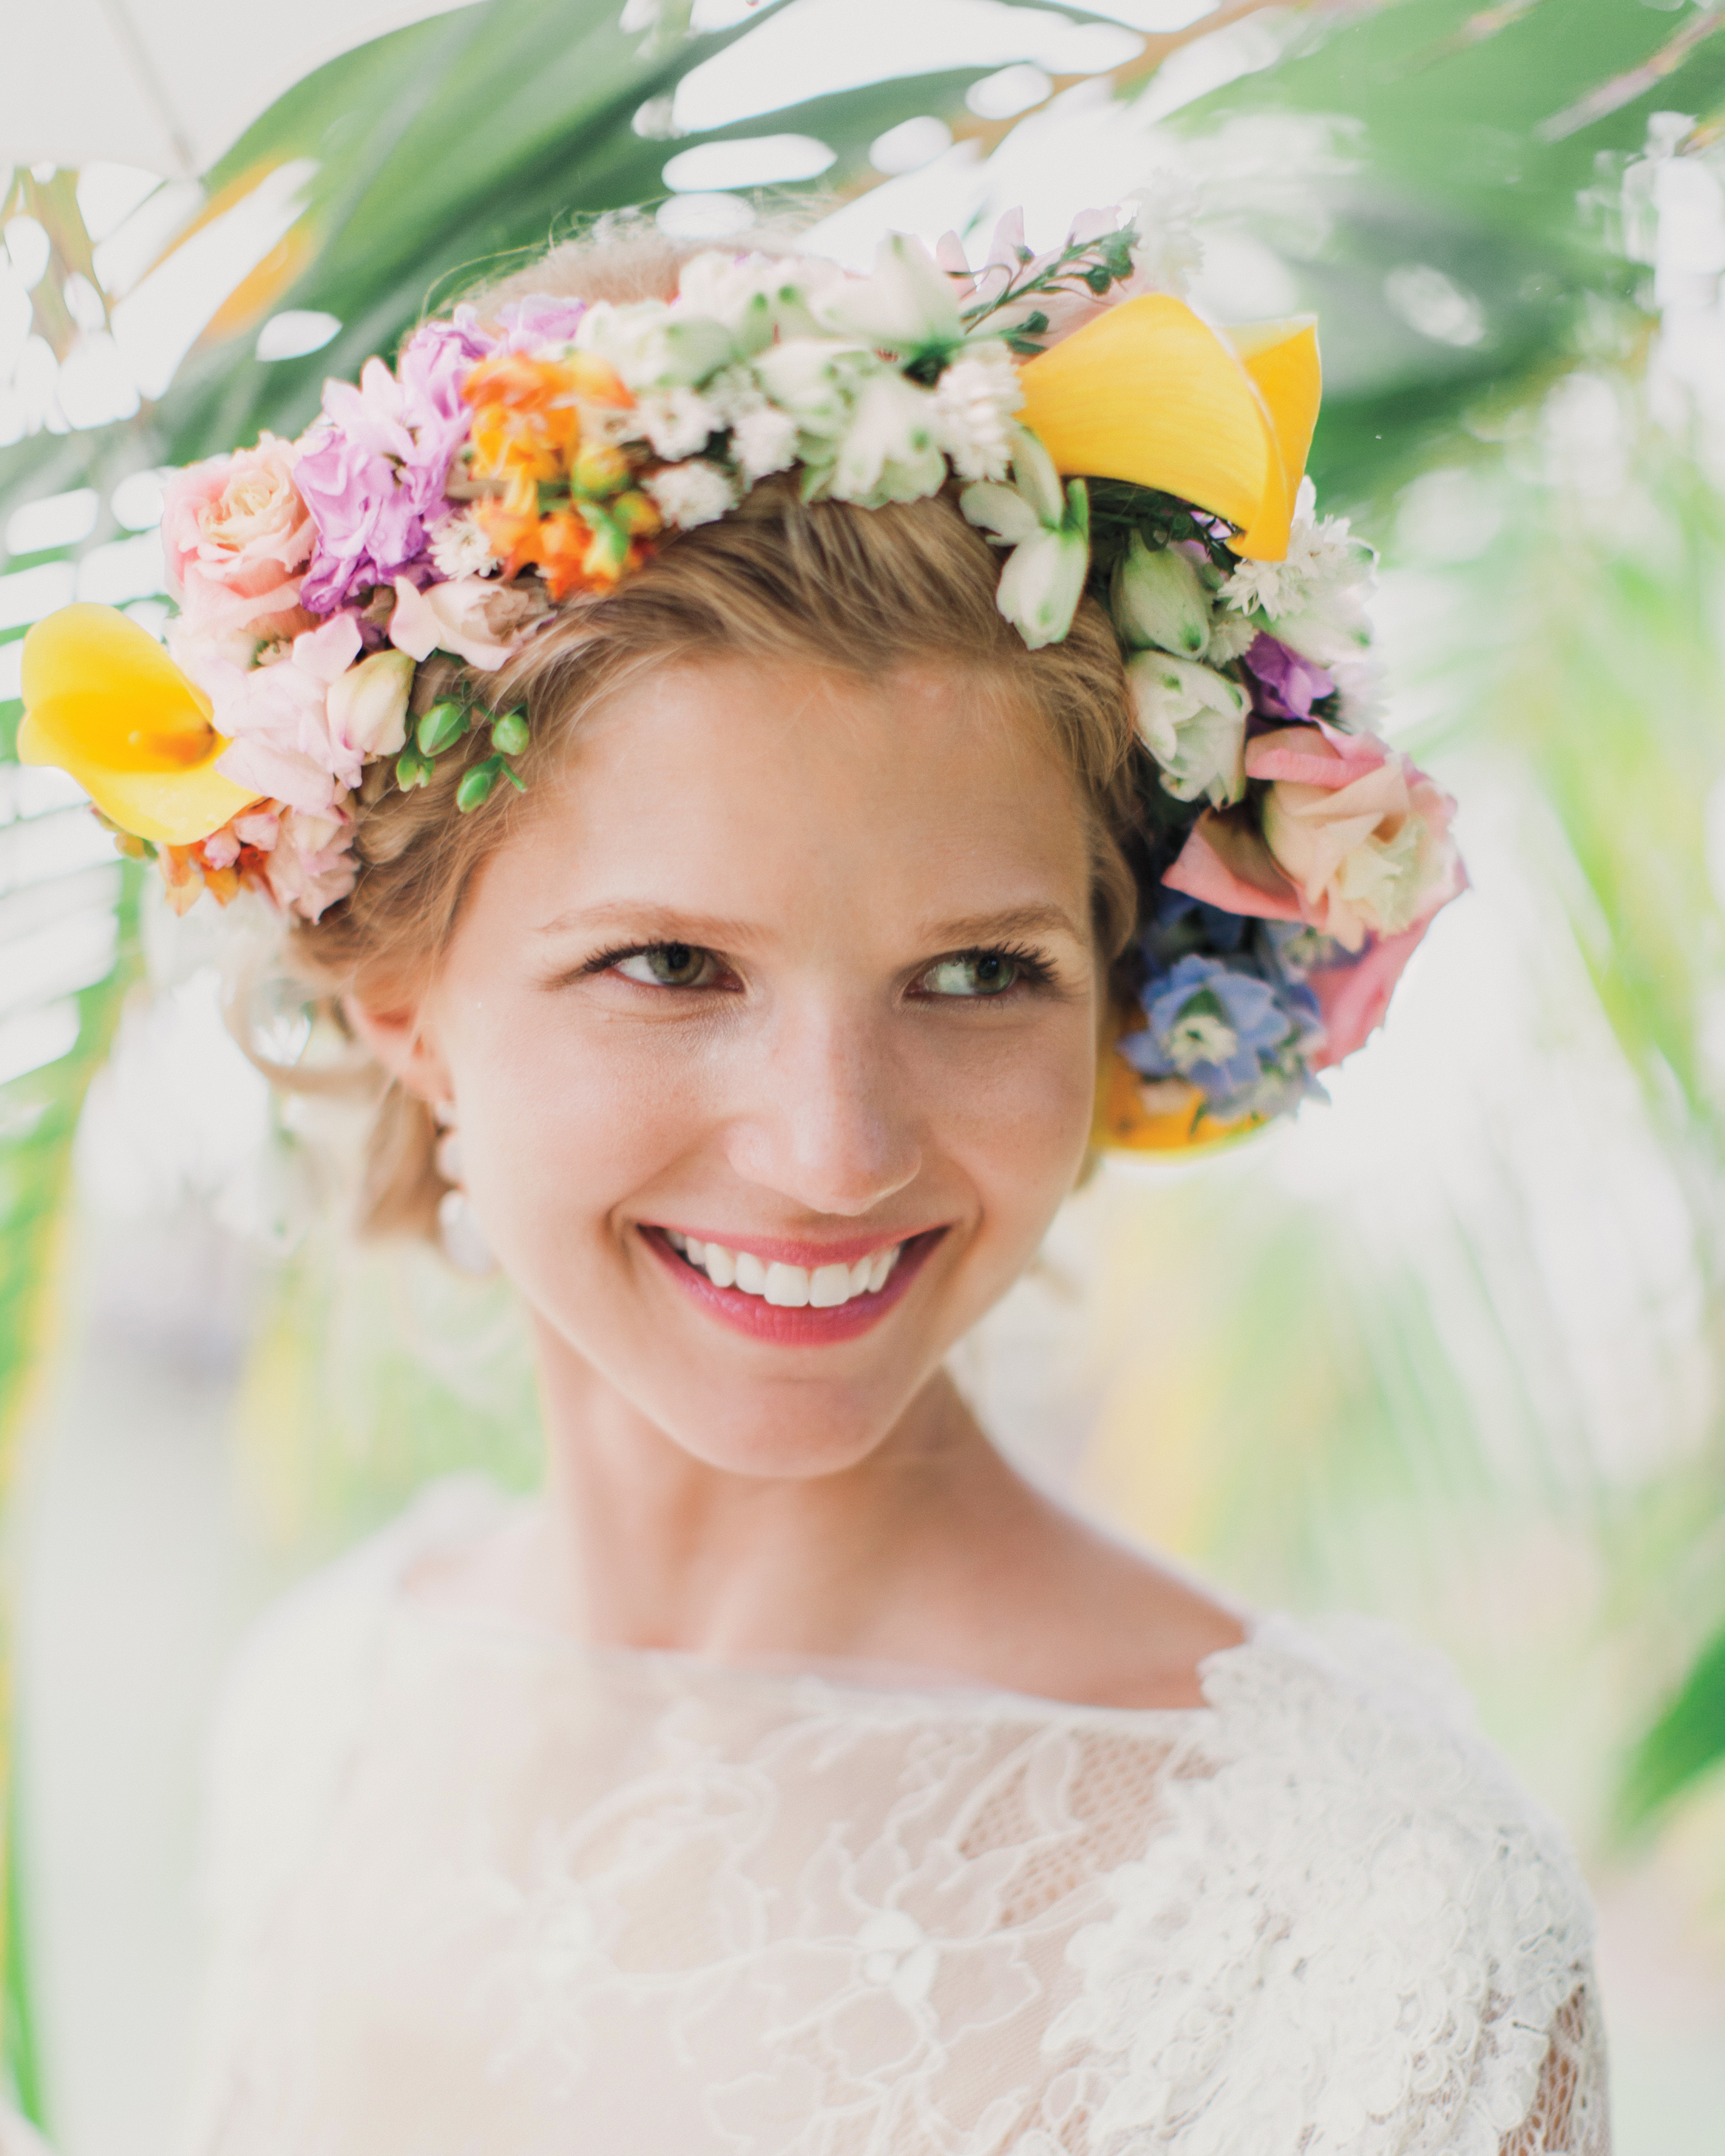 Boho Flower Floral Hair Garland Crown Headband Wedding Bridal shower Headpiece